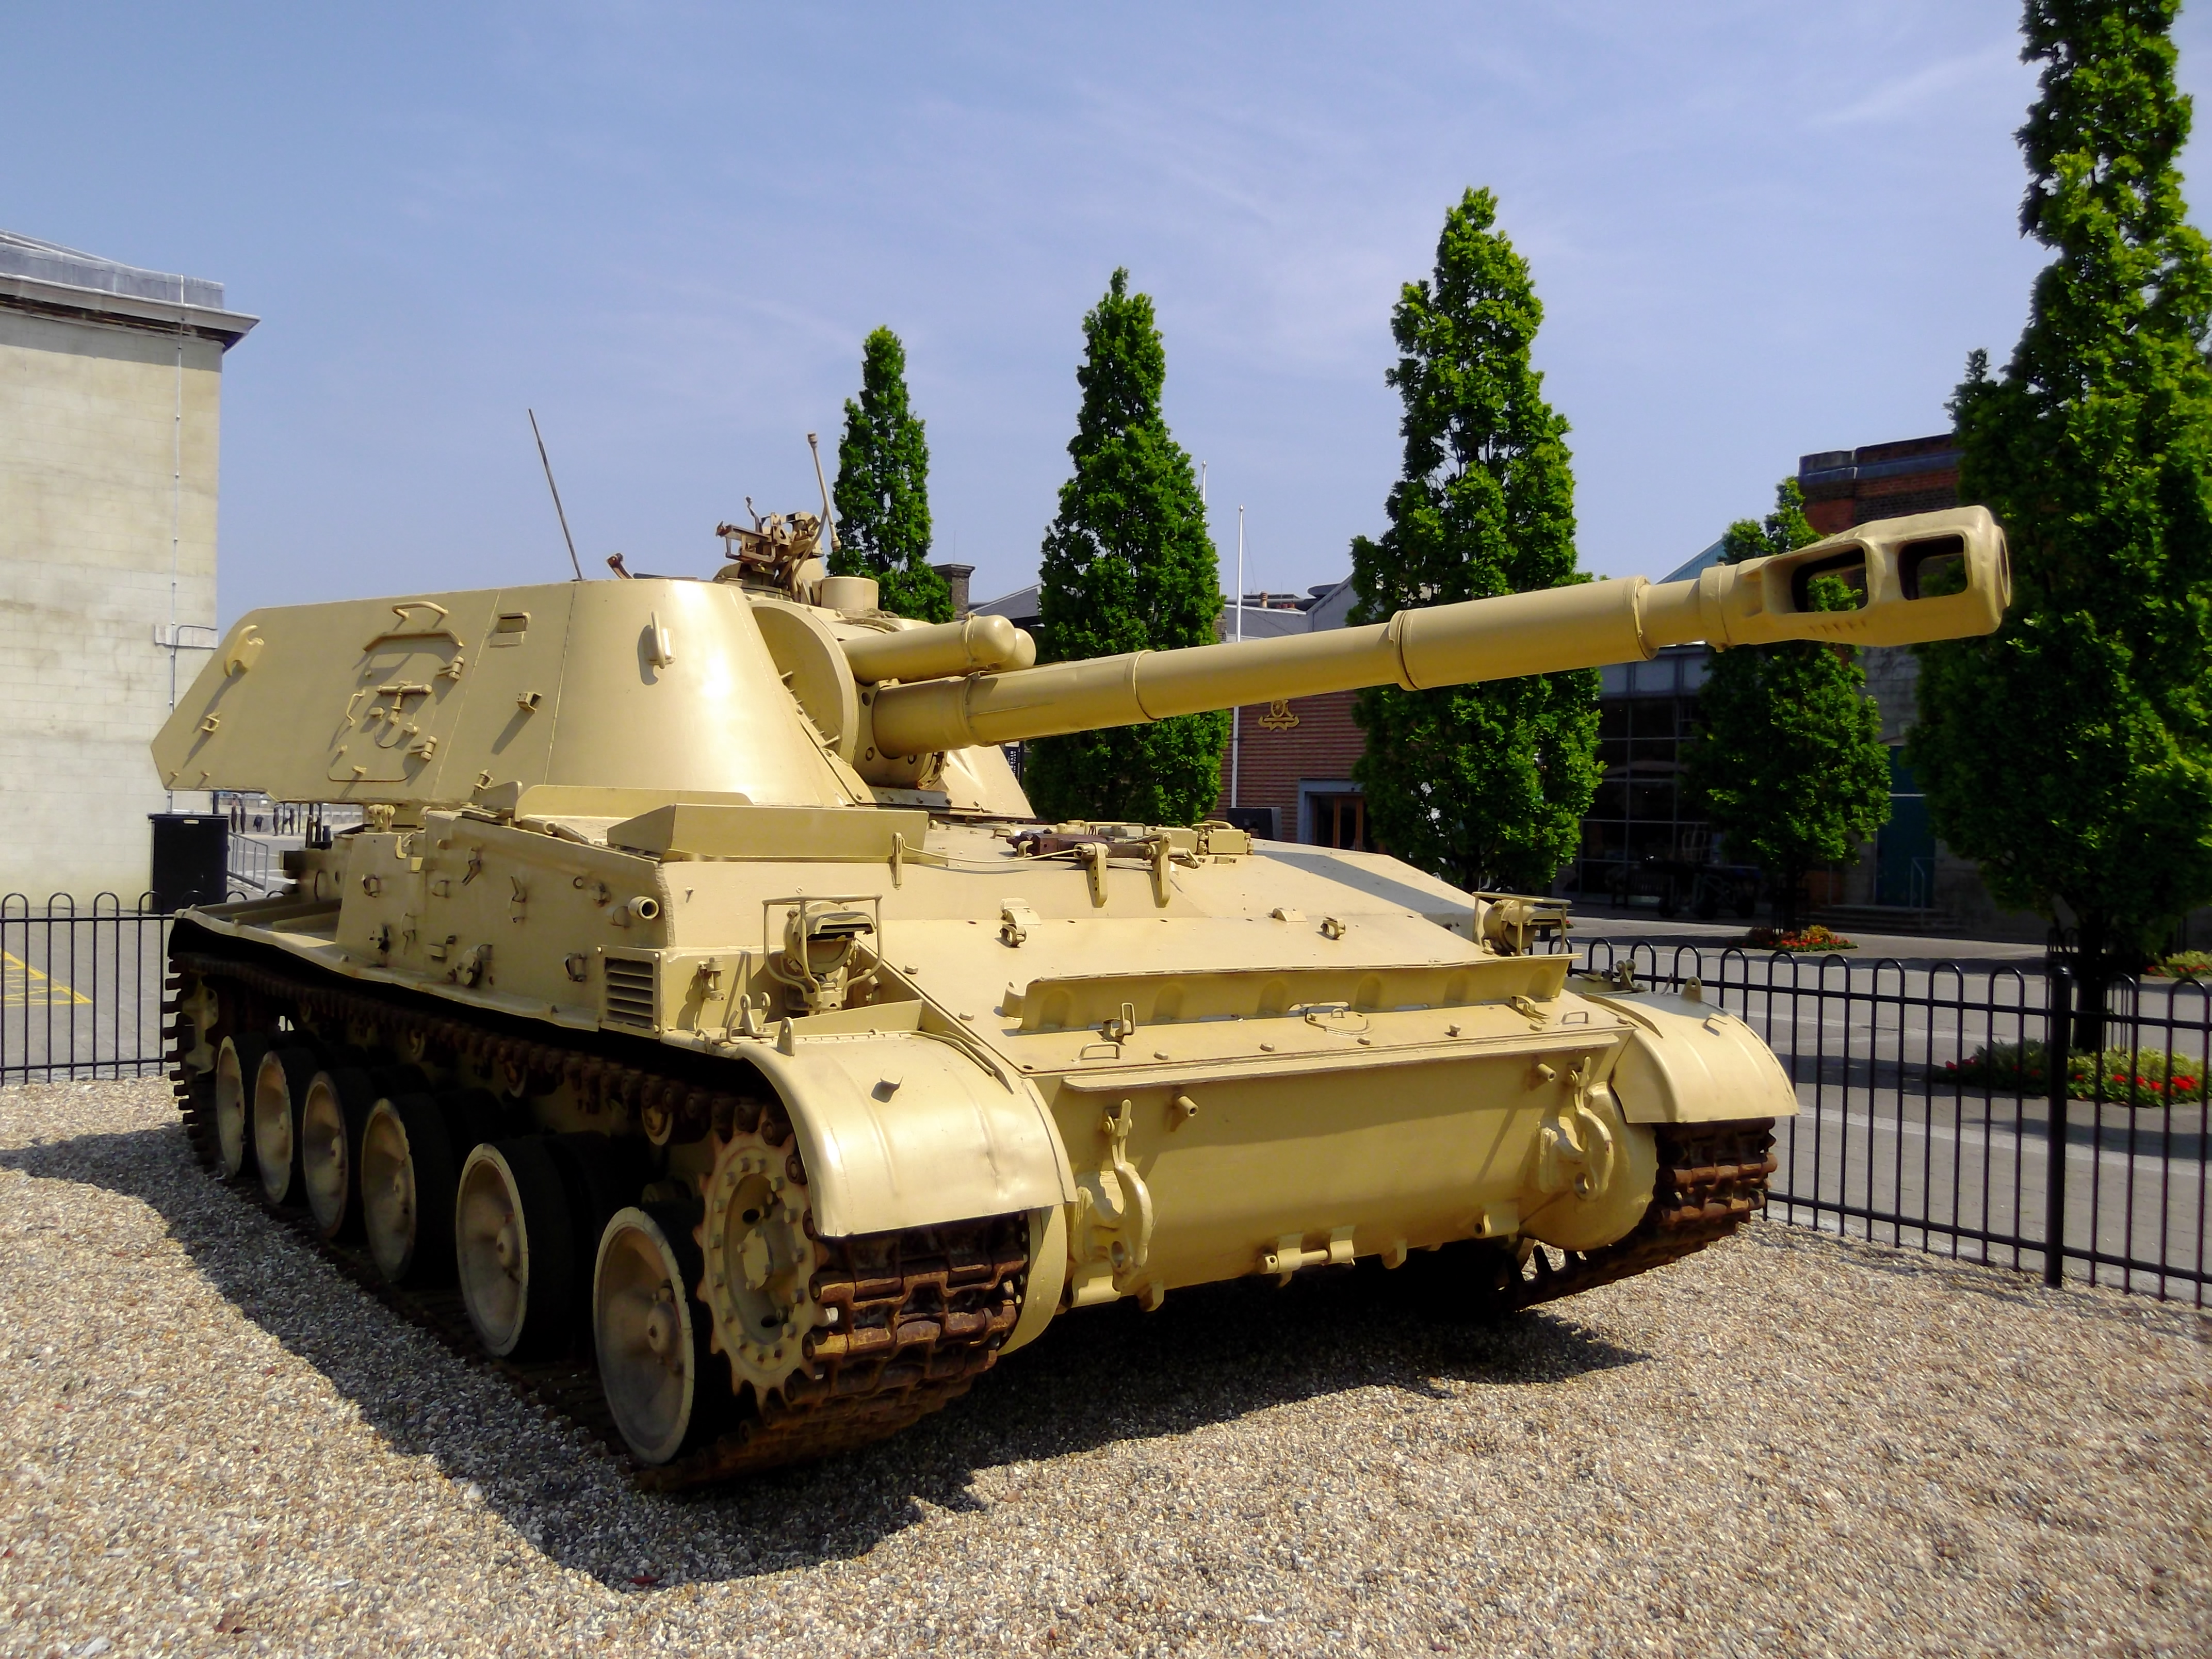 File:Flickr - davehighbury - Royal Artillery Museum Tank Woolwich ...